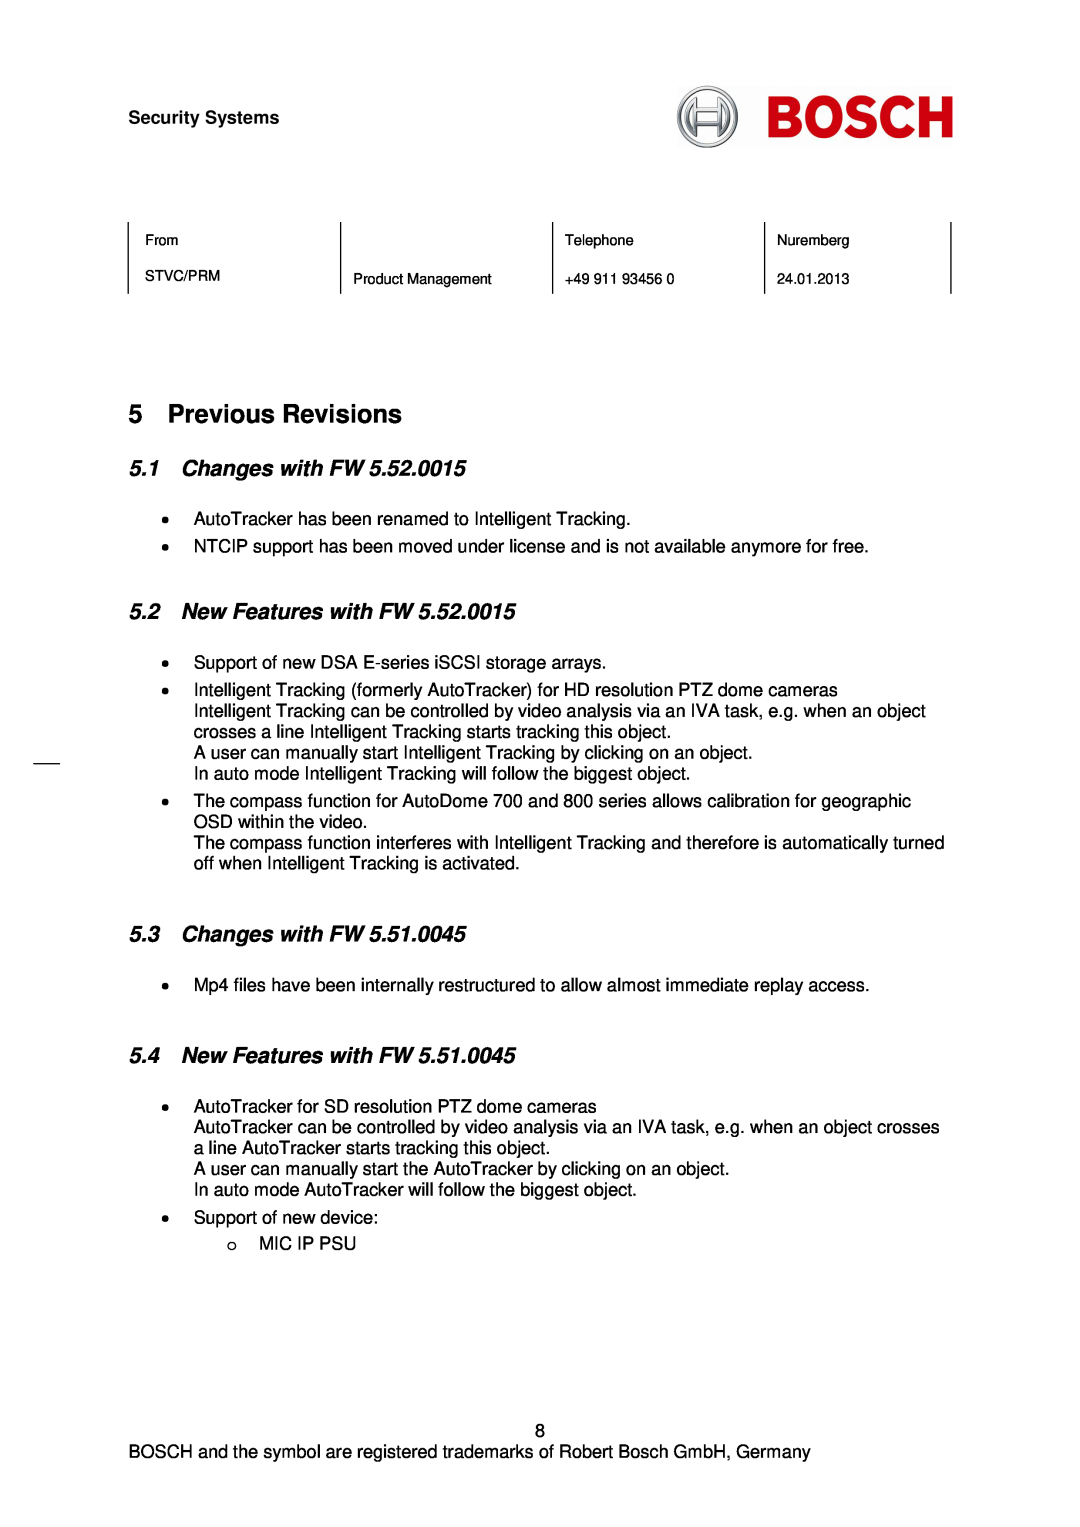 Bosch Appliances H-264 manual Previous Revisions, 5.1Changes with FW, 5.2New Features with FW, 5.3Changes with FW 